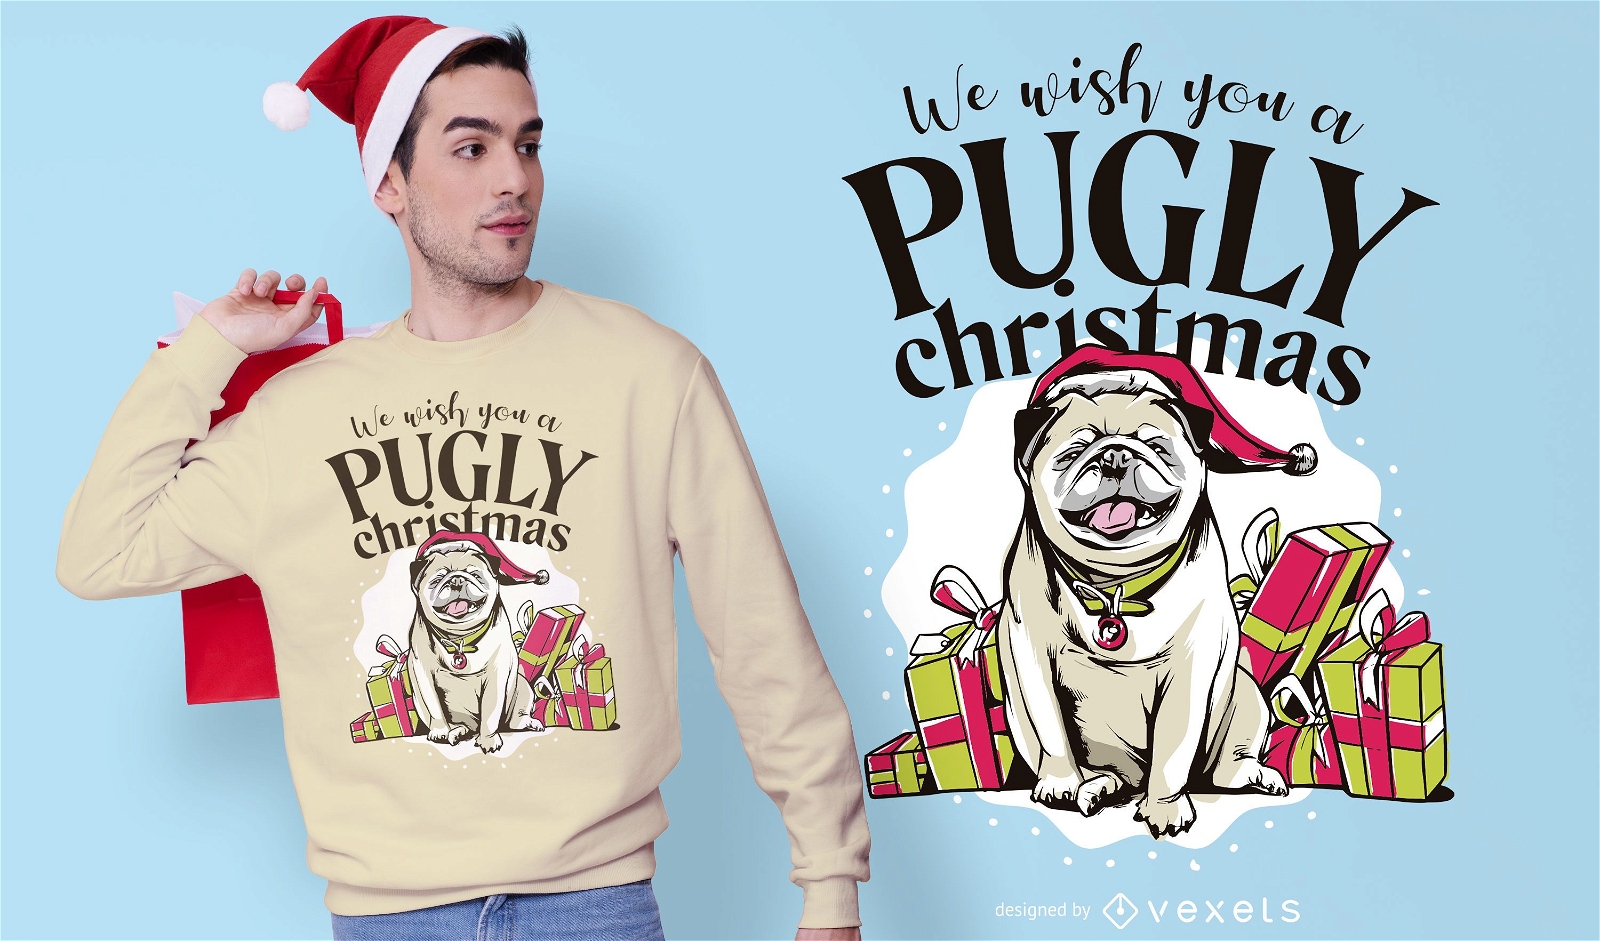 Pugly christmas t-shirt design